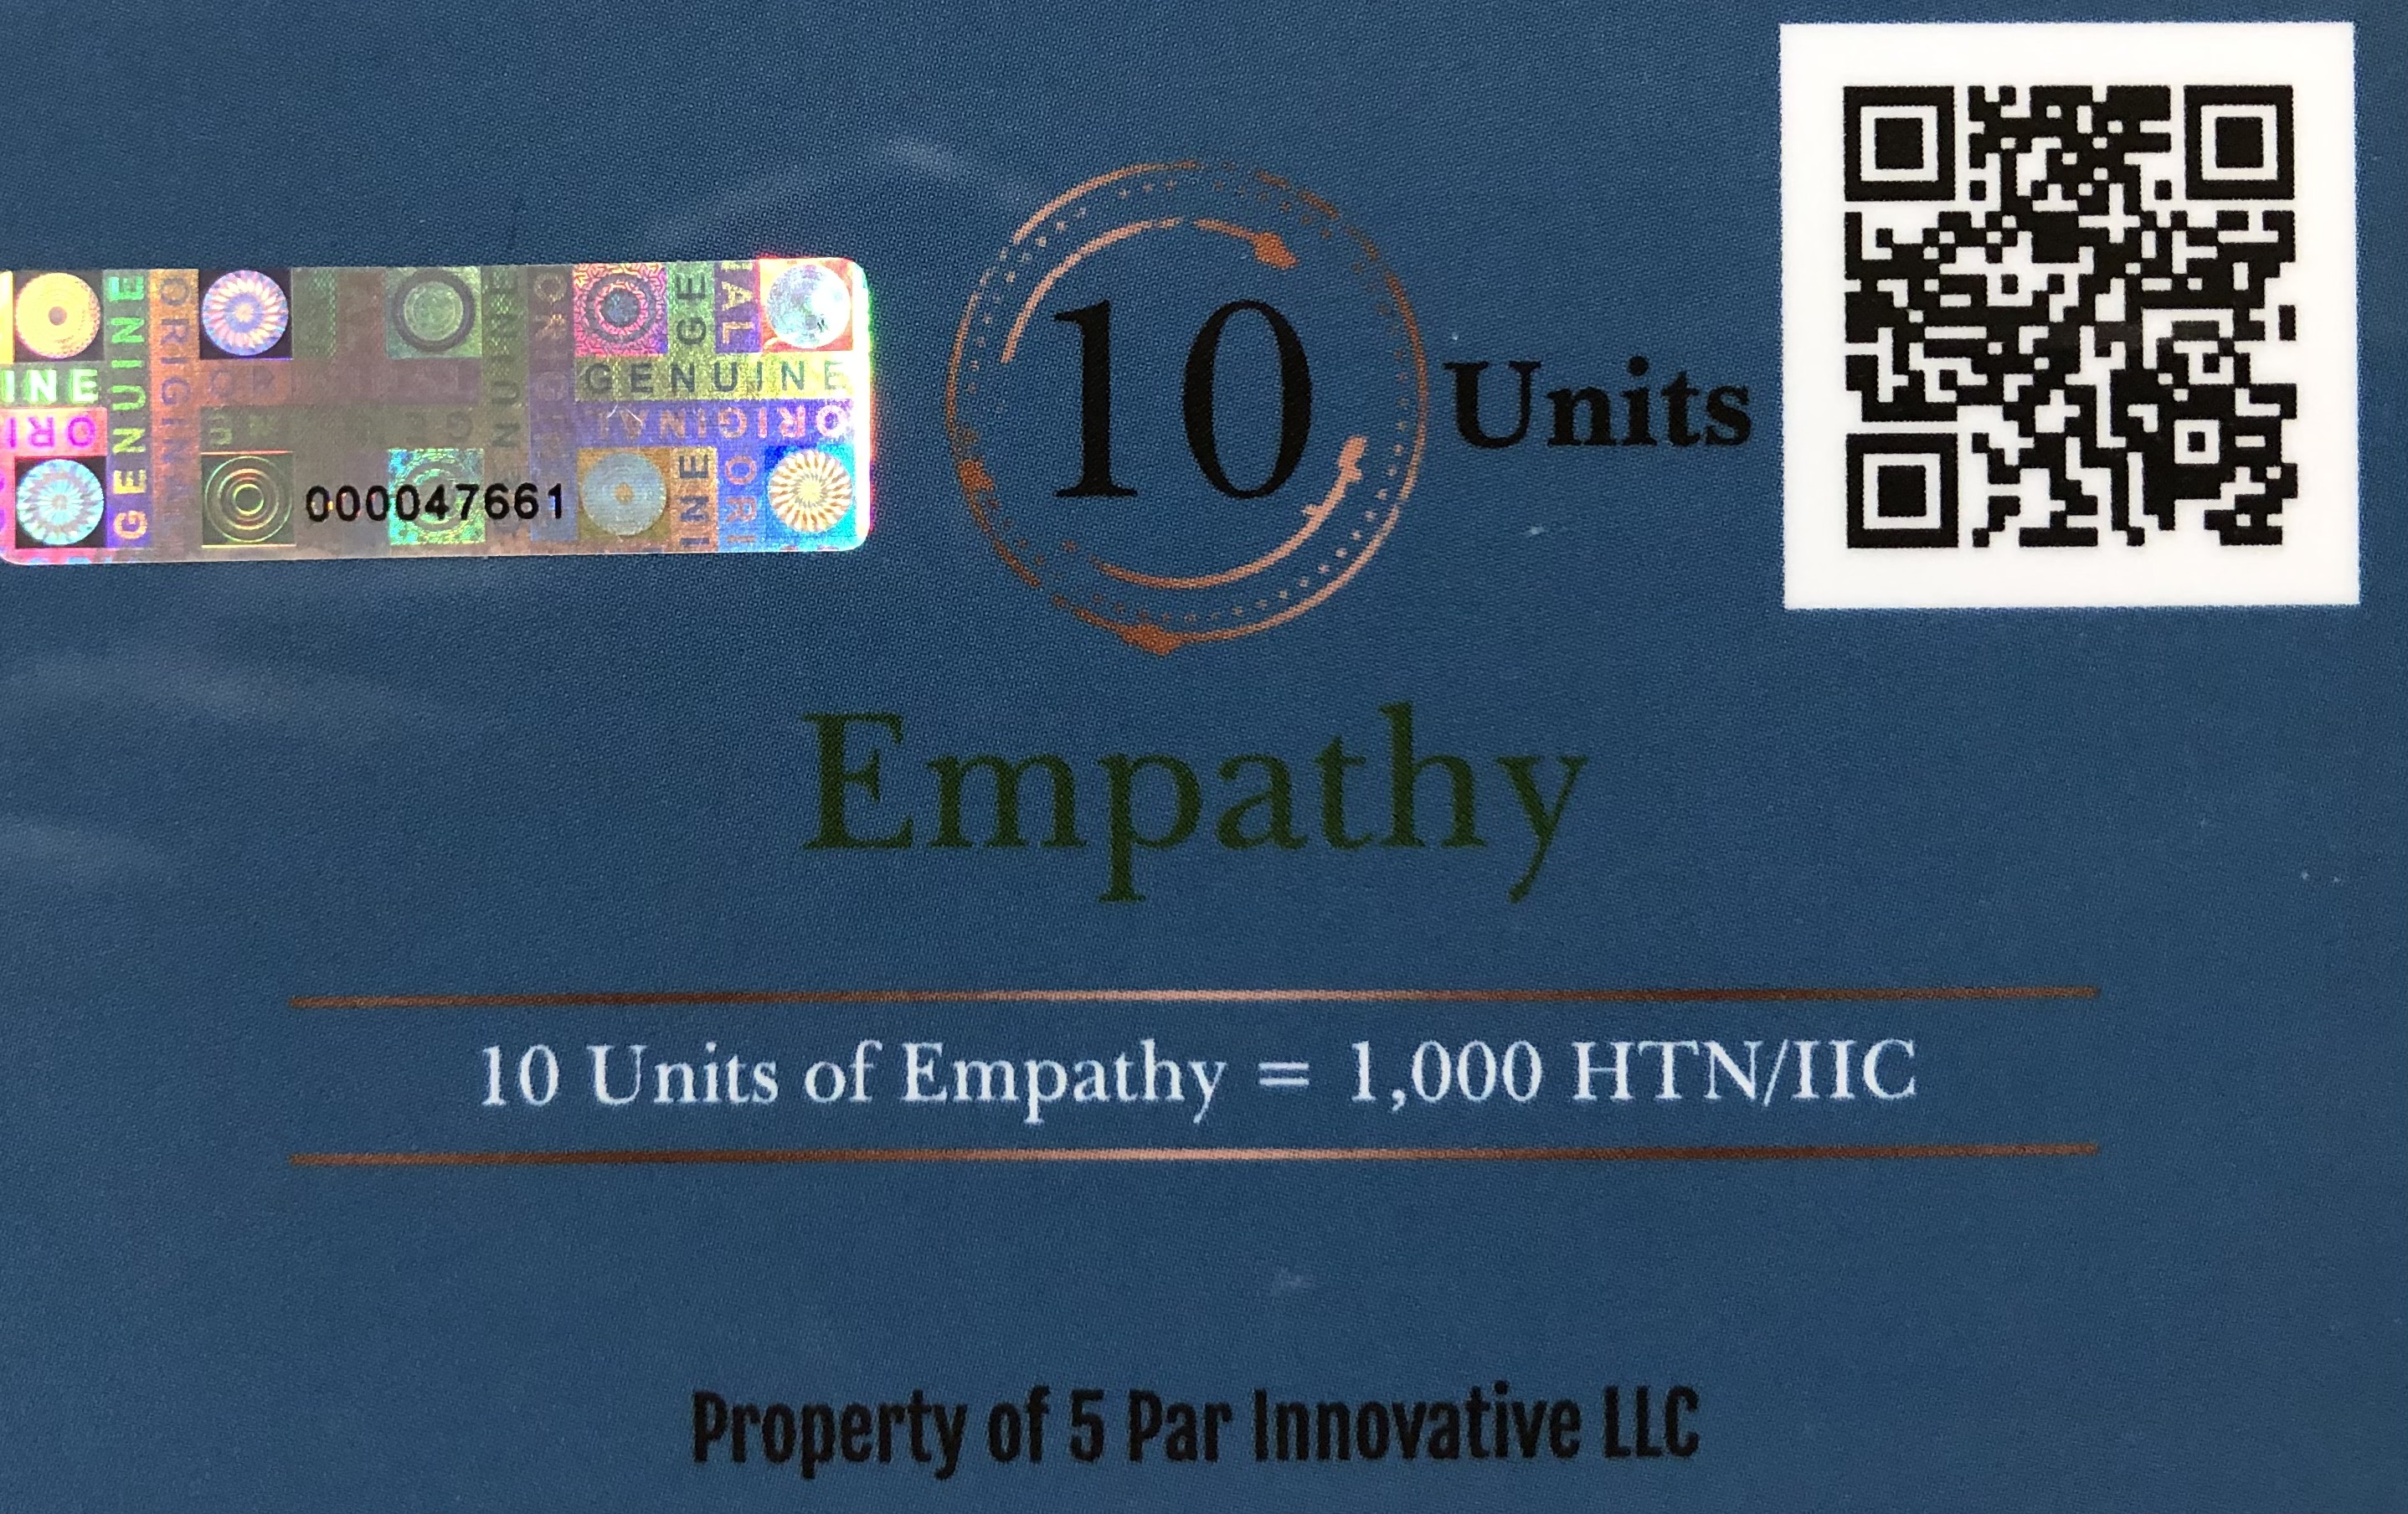 10 Units of Empathy